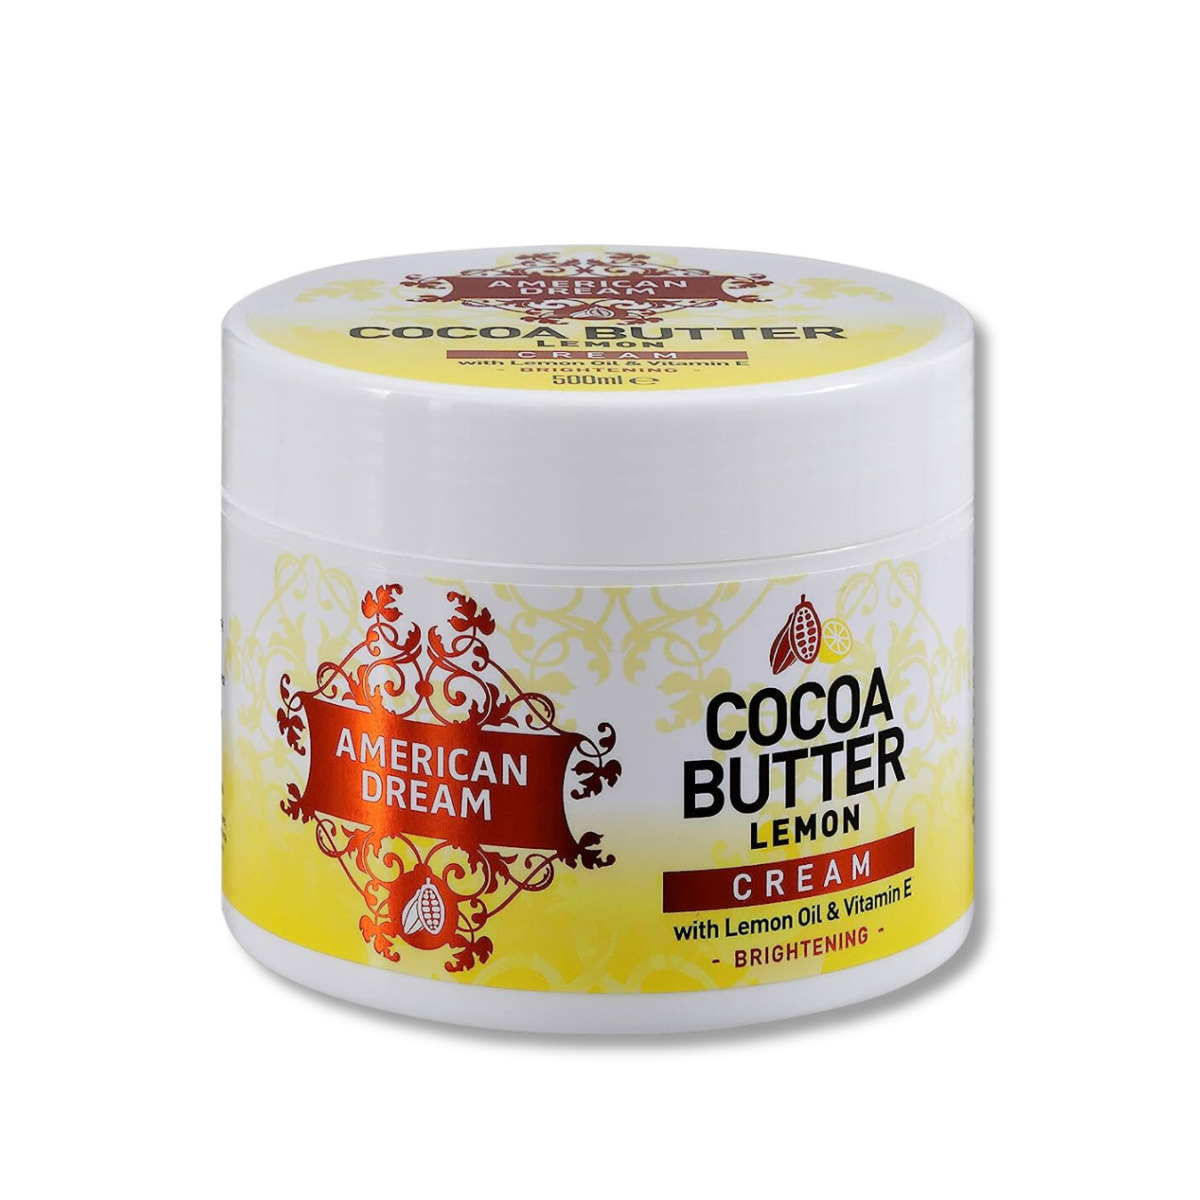 Brightening Cocoa Butter Lemon Cream, 500ml-0